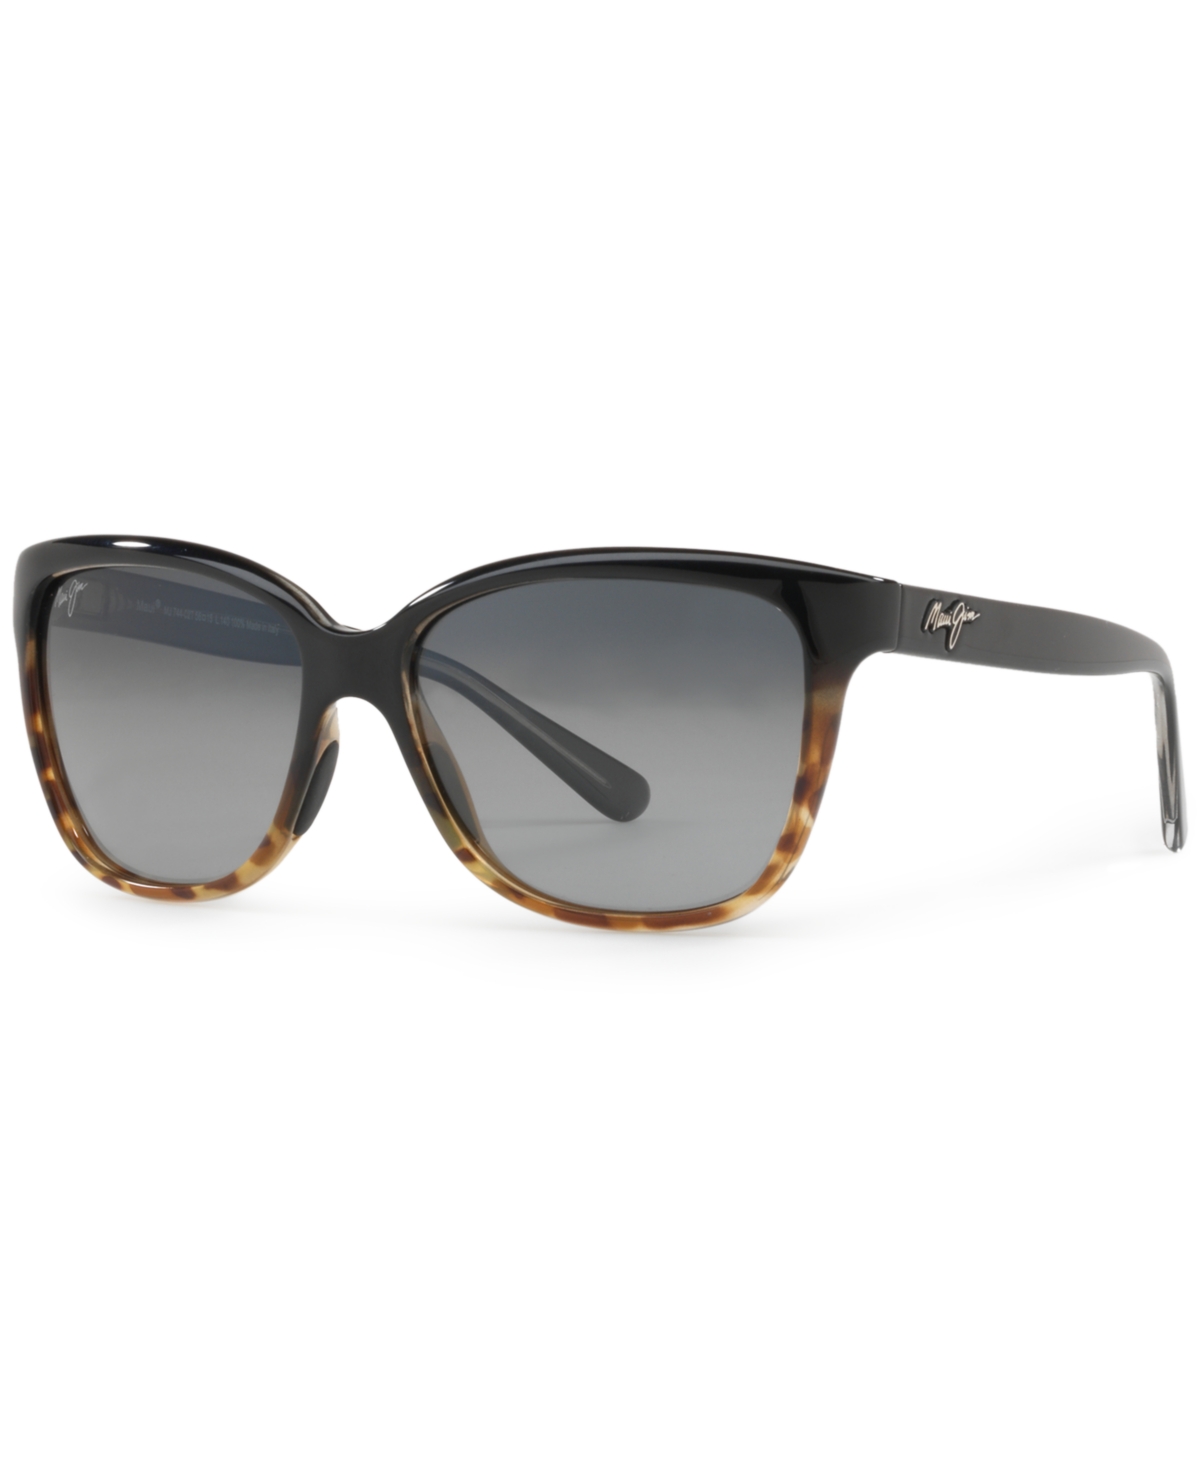 Starfish Polarized Sunglasses , 744 - BLACK TORTOISE/GREY GRADIENT POLARIZED